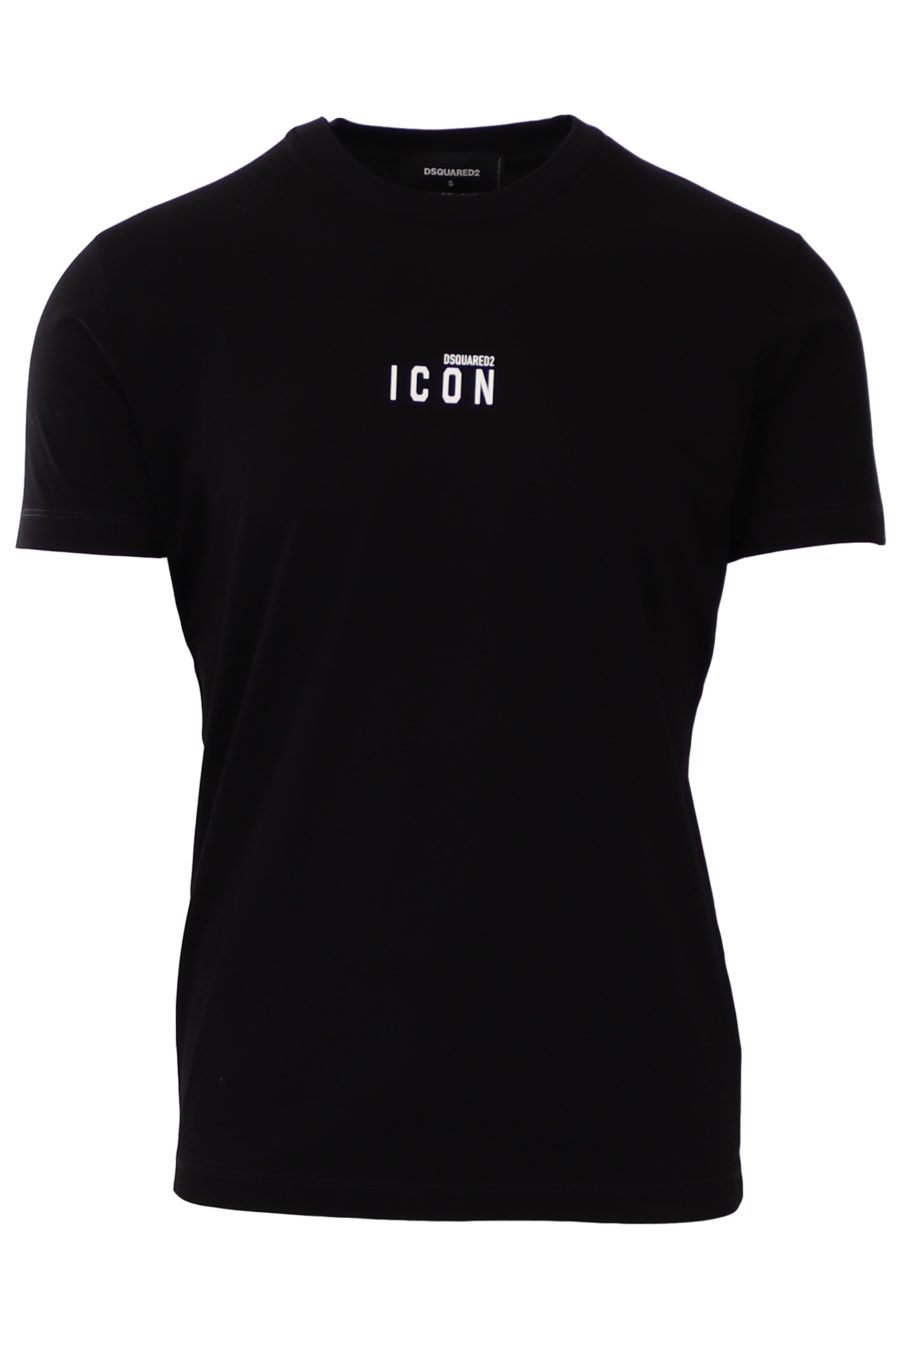 T-shirt Dsquared2 noir avec icône blanche au milieu - f283758b96fd12297da3afff39e8cbefe4f4eba3